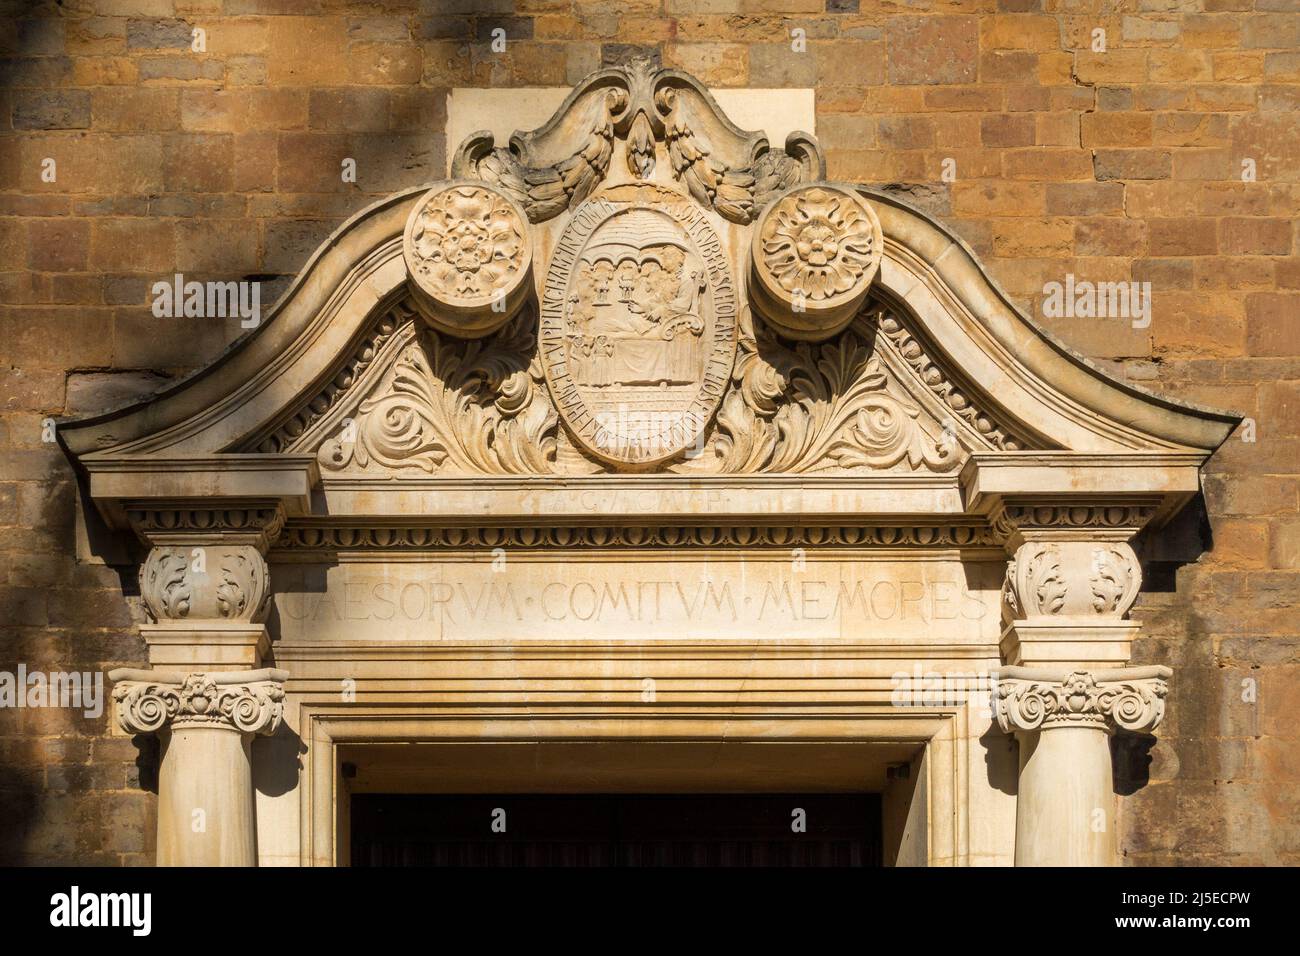 Ornate masonry and stonework around entrance to Uppingham School Theatre, Rutland, England, UK Stock Photo